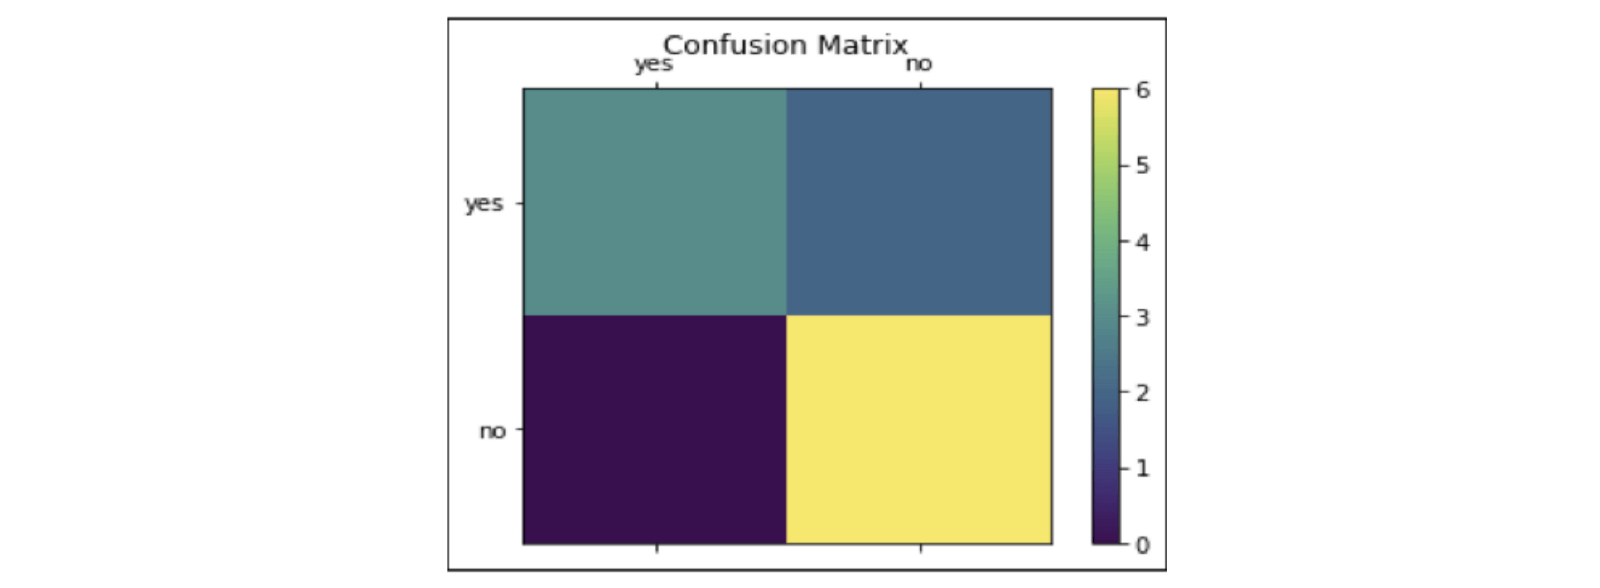 Confusion matrix of the final prediction by logistic regression